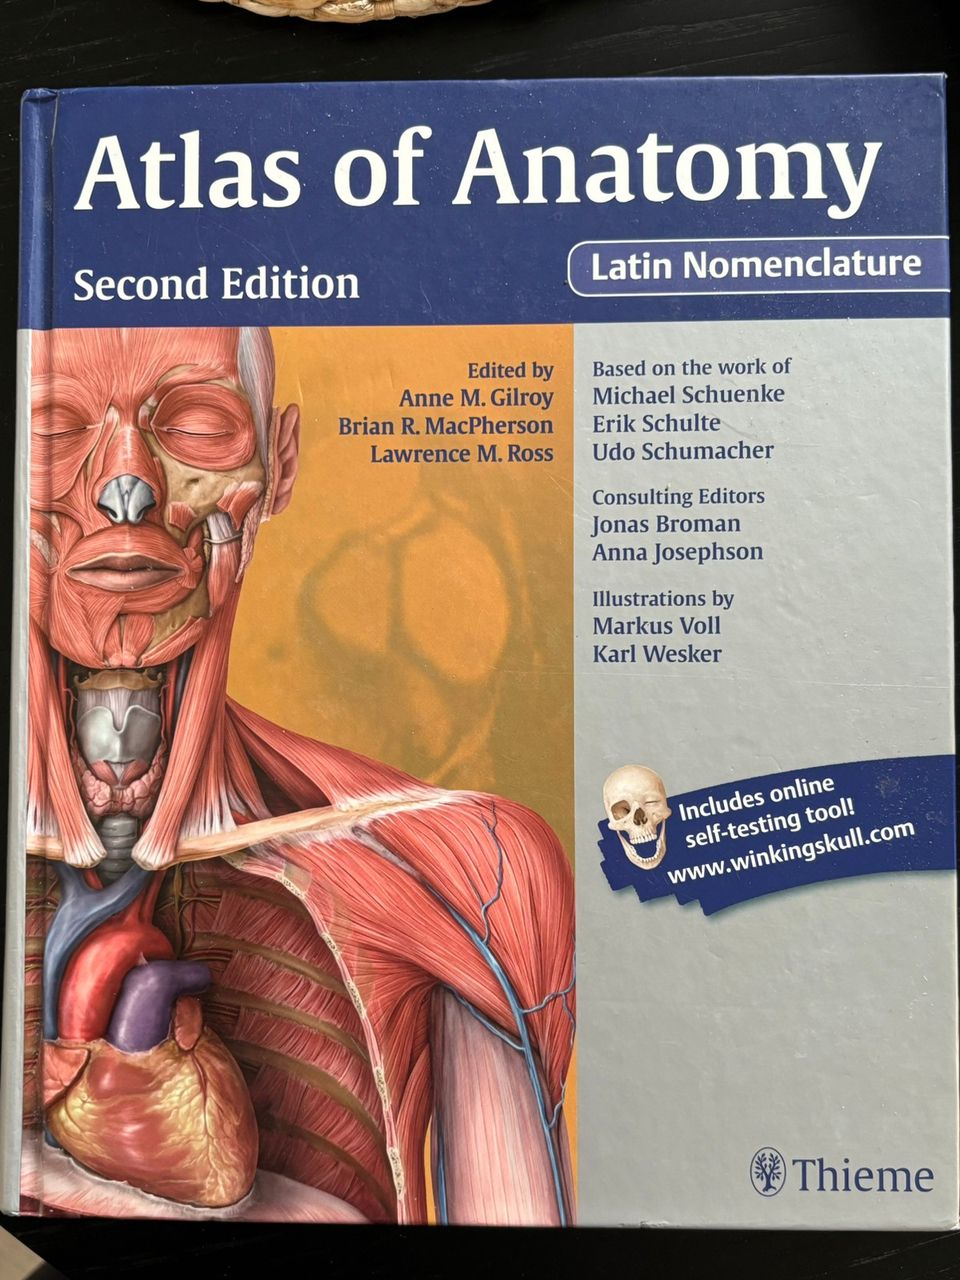 Thieme Atlas of Anatomy 2nd Edition